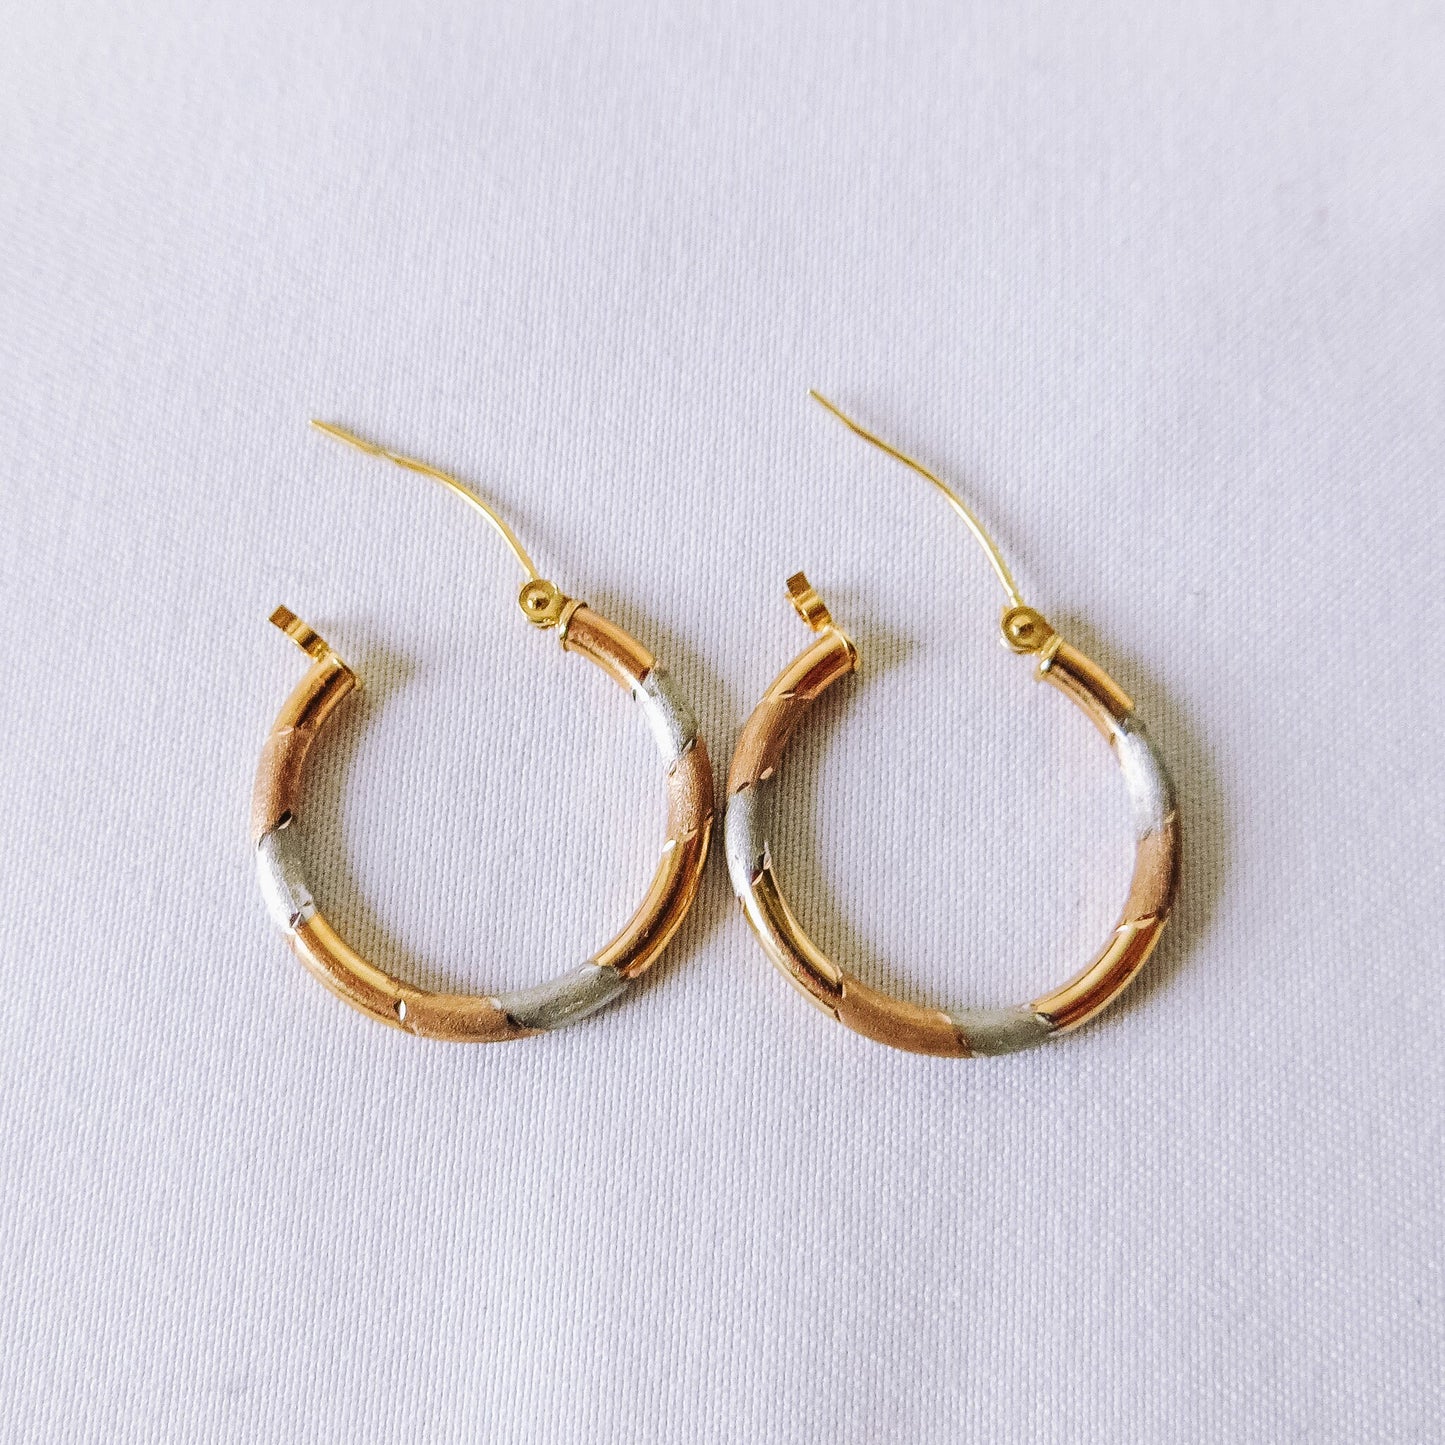 Vintage 90's 14k Gold Filled Tri-Tone Hoop Earrings, Cute Retro Jewelry